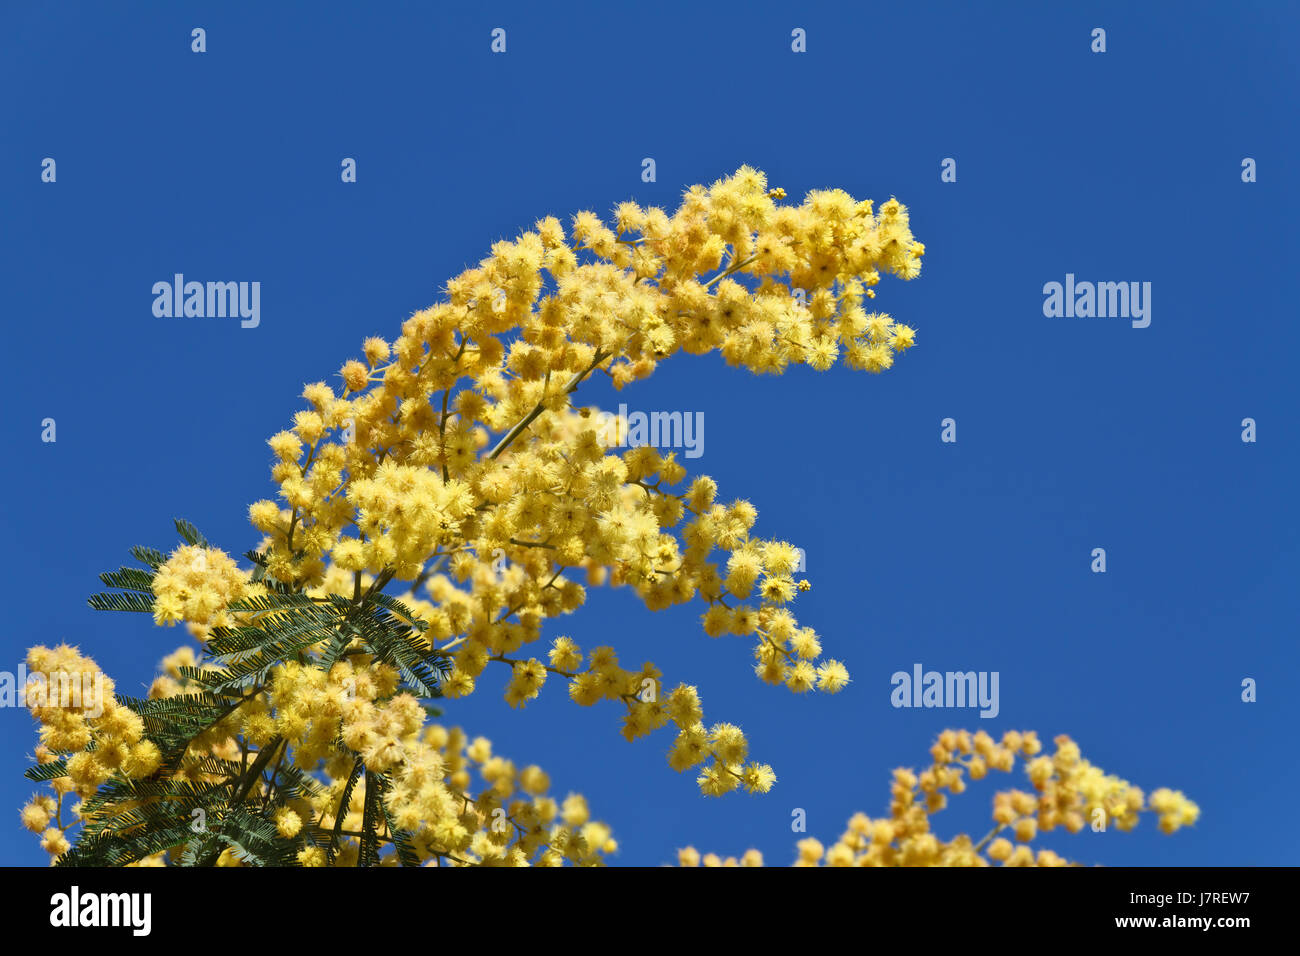 Frau Blau Baum Blume Blumen Pflanzen Frühling Firmament Himmel Piktogramm symbol Stockfoto